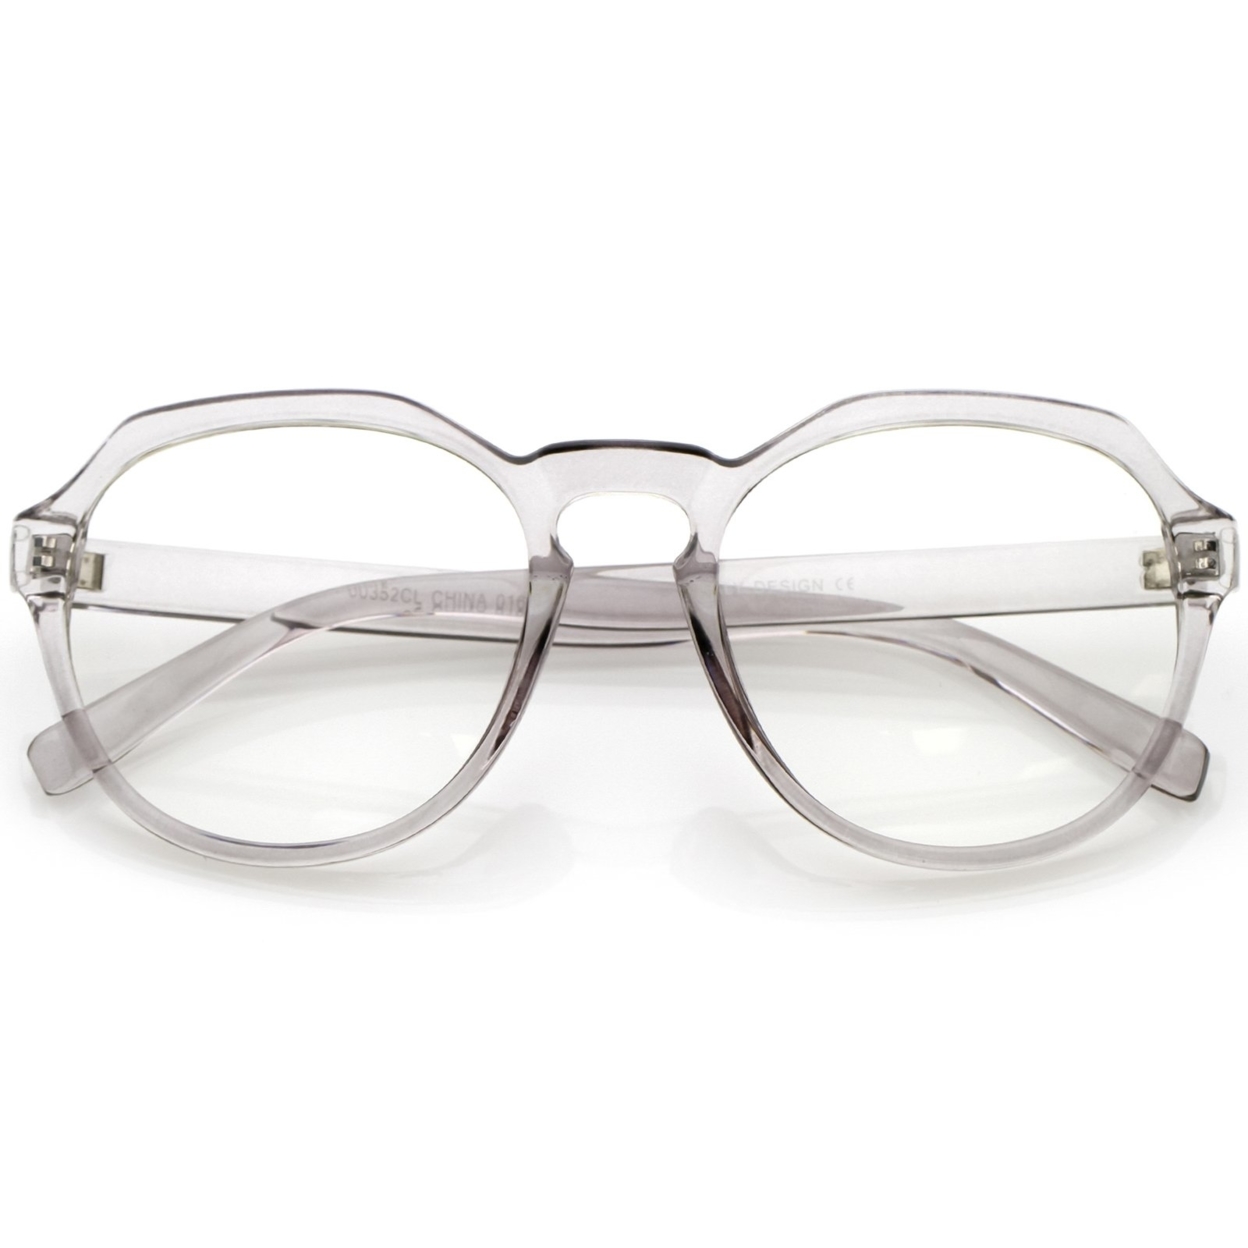 Modern Keyhole Nose Bridge Clear Lens Round Eyeglasses 55mm - Black / Clear